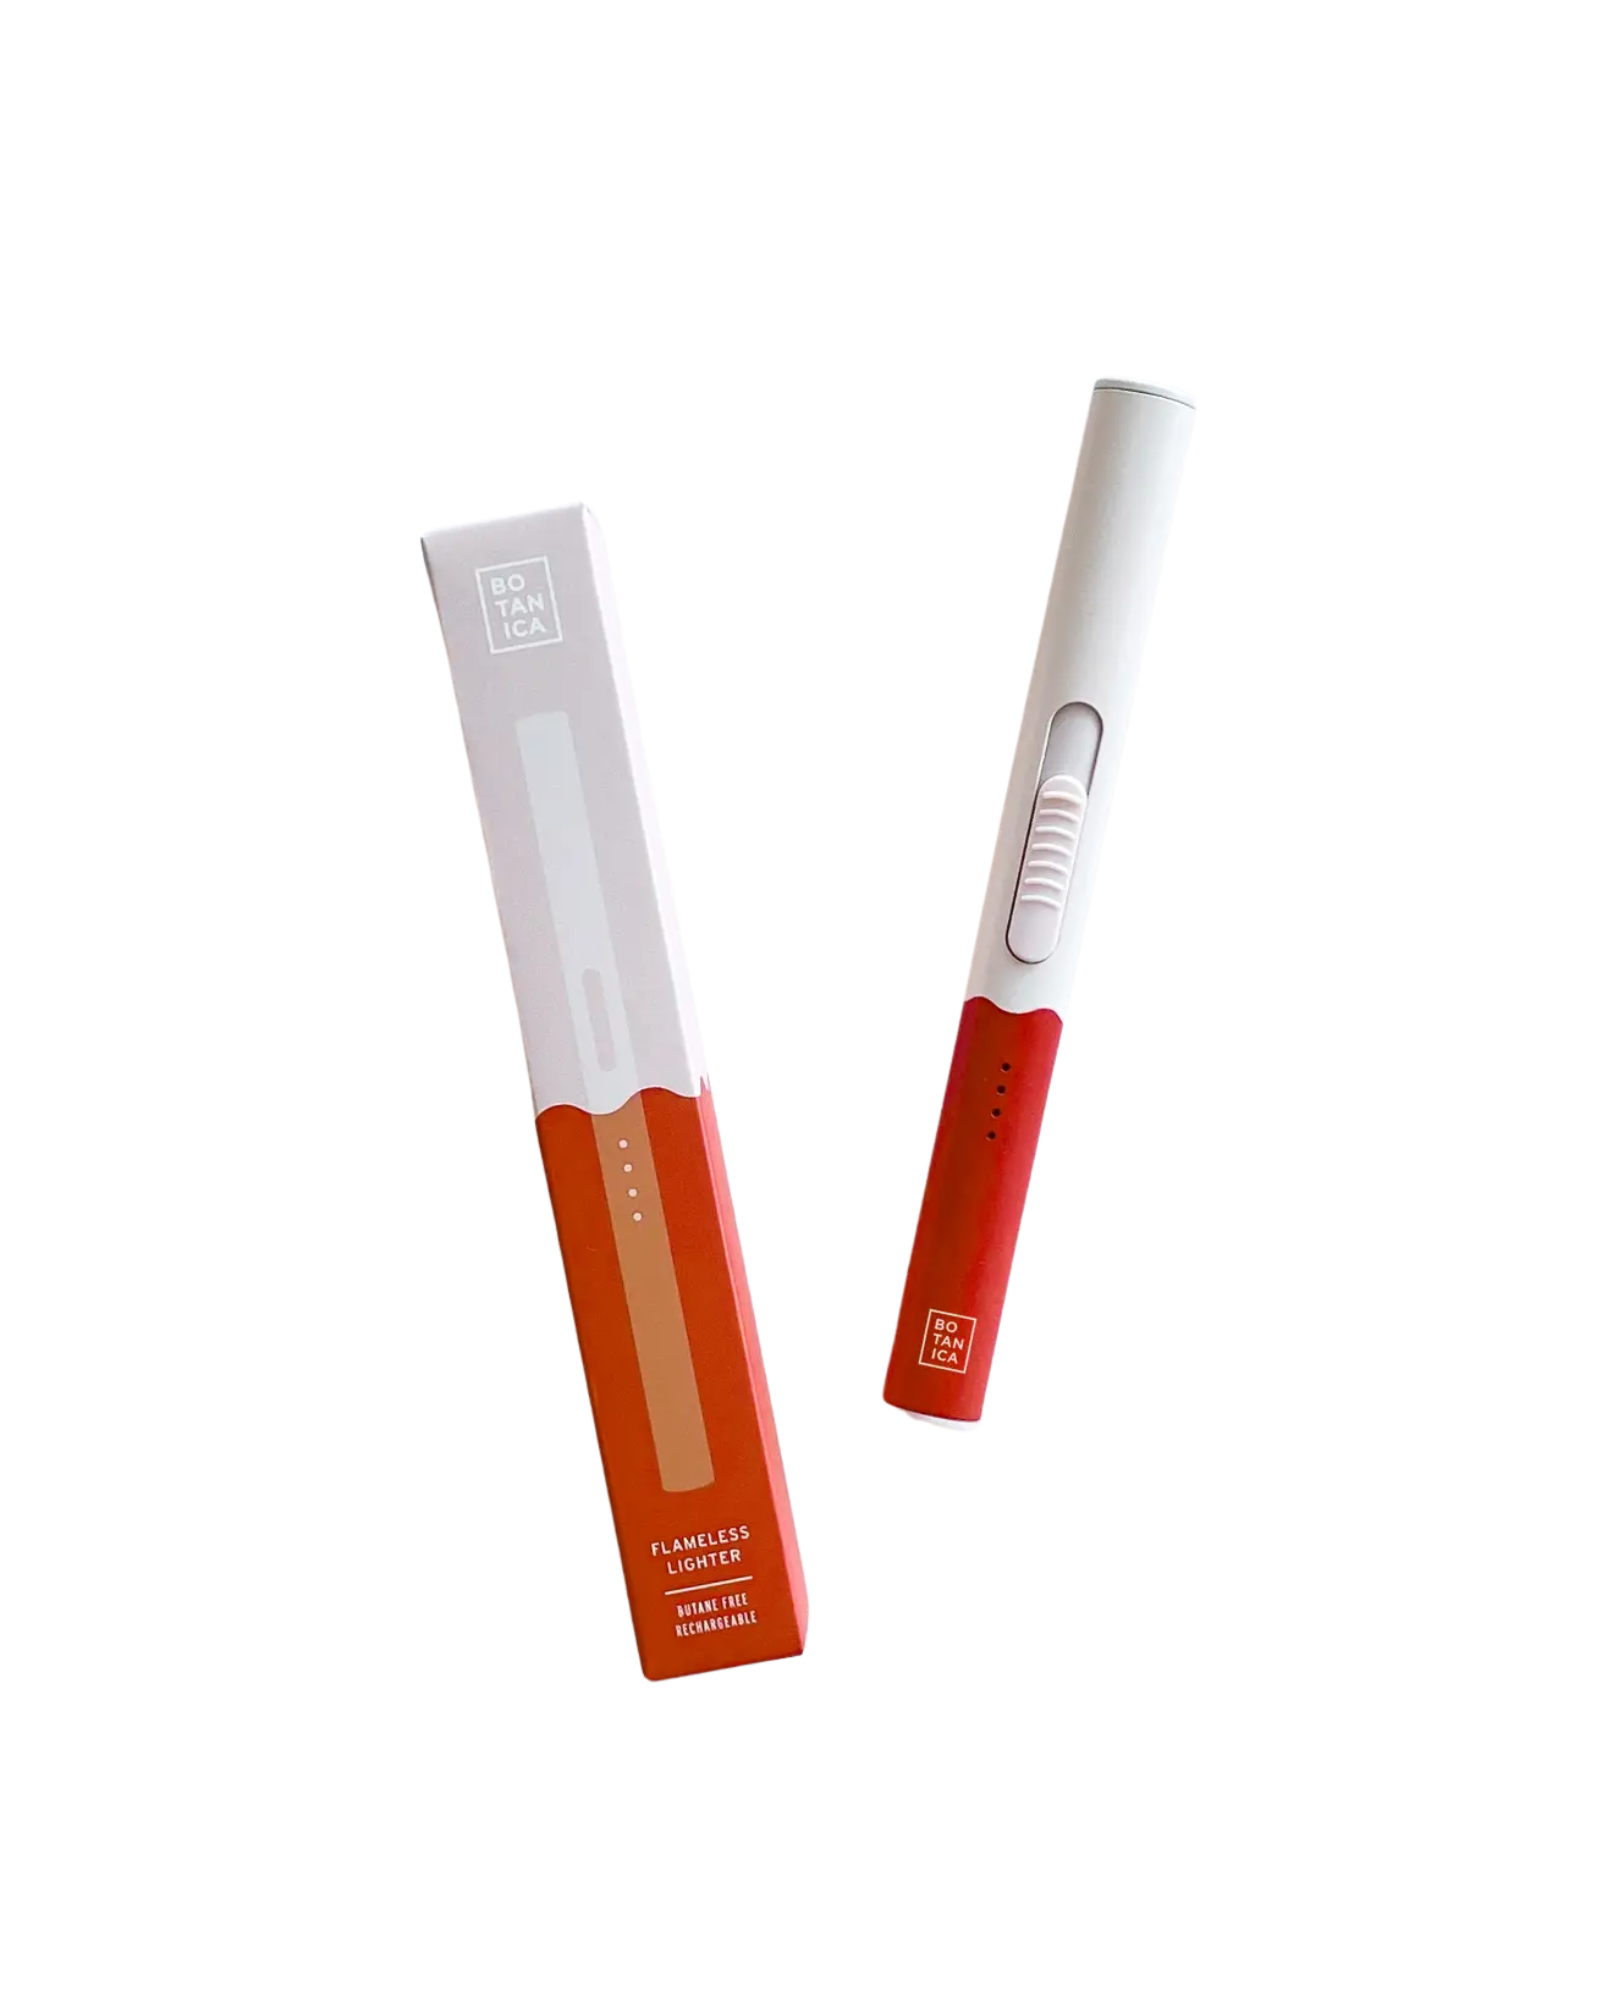 White and orange flameless lighter next to matching box